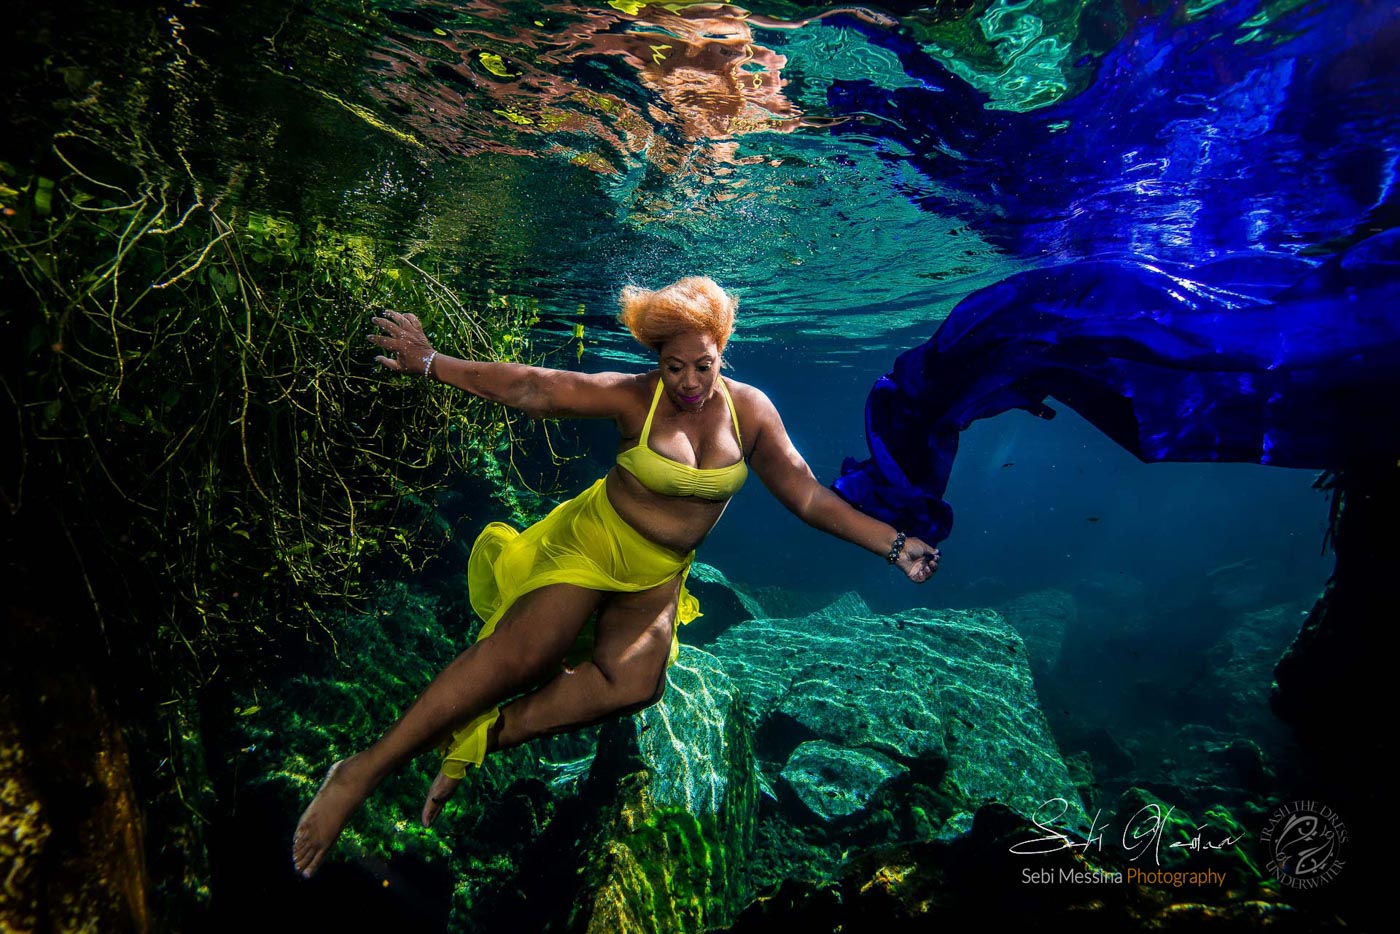 Black Model Underwater - Veronica - Sebi Messina Photography